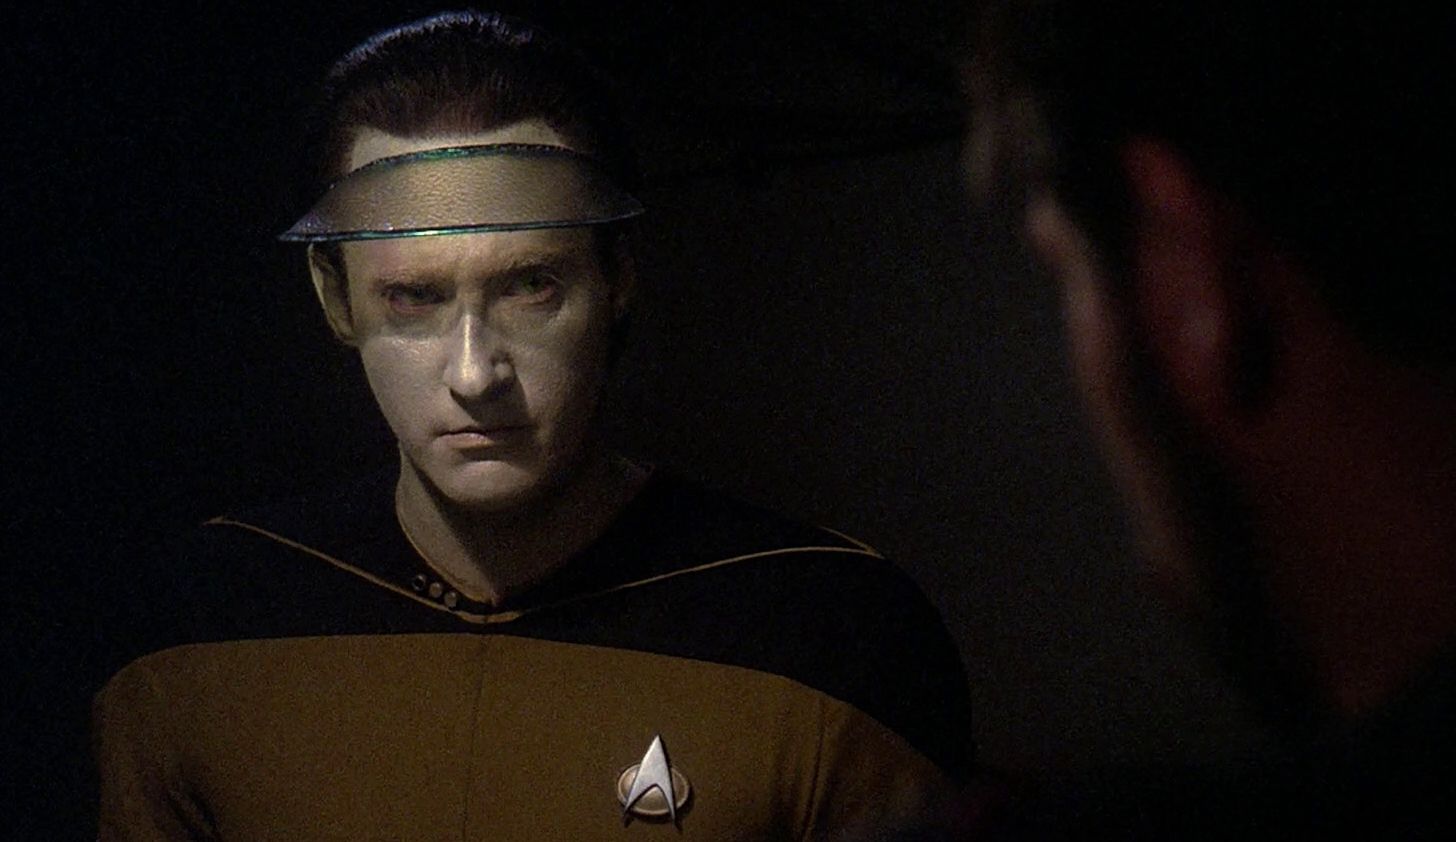 Data and Riker playing poker on Star Trek The Next Generation